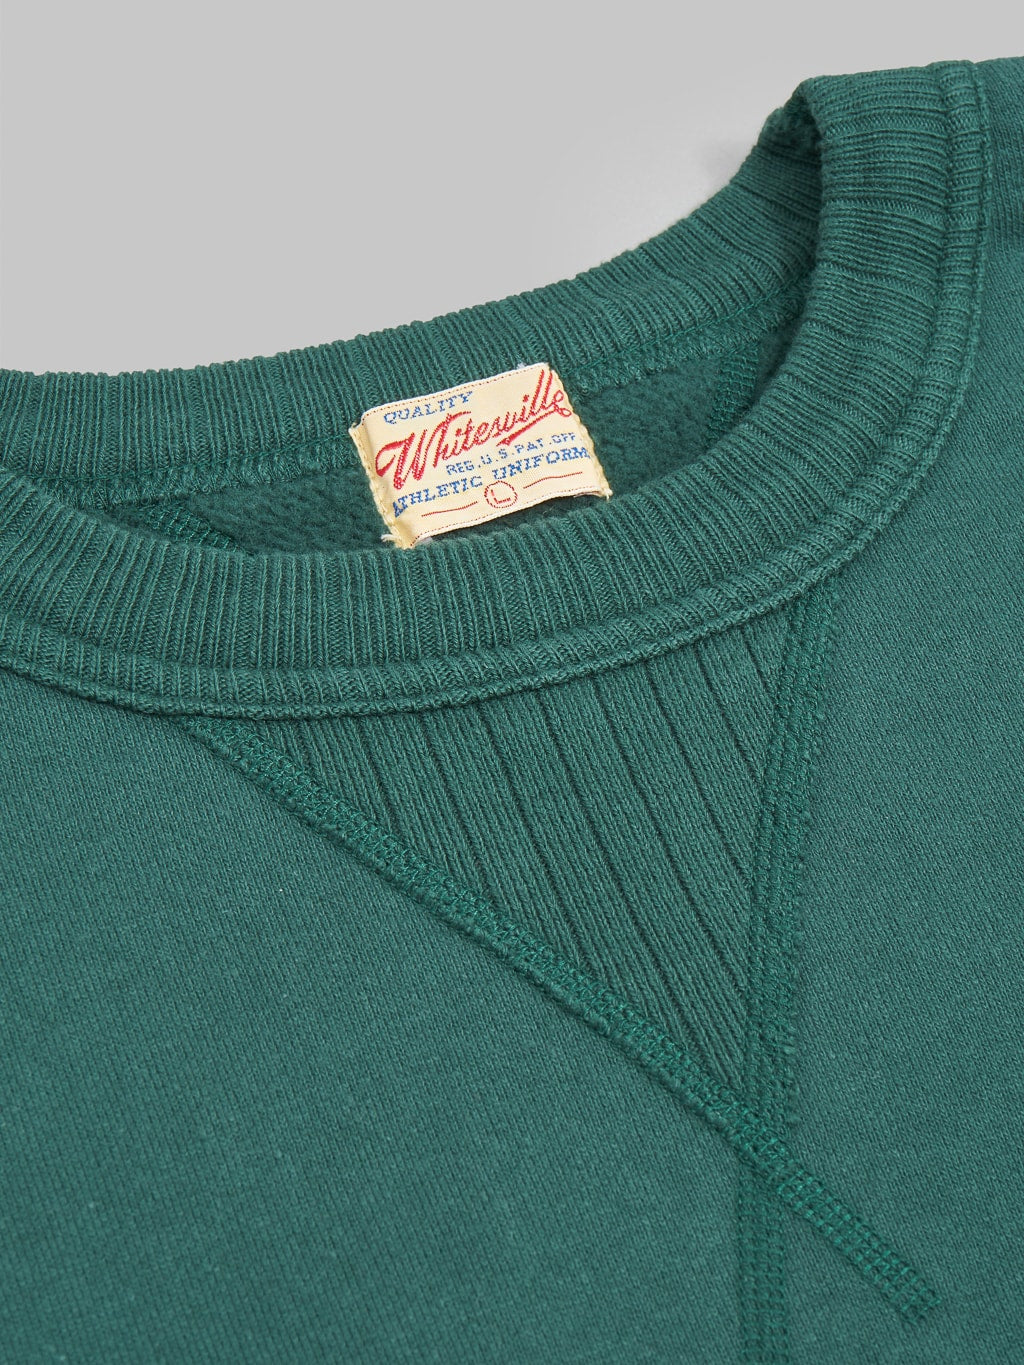 Whitesville Loopwheel Sweatshirt Green collar details